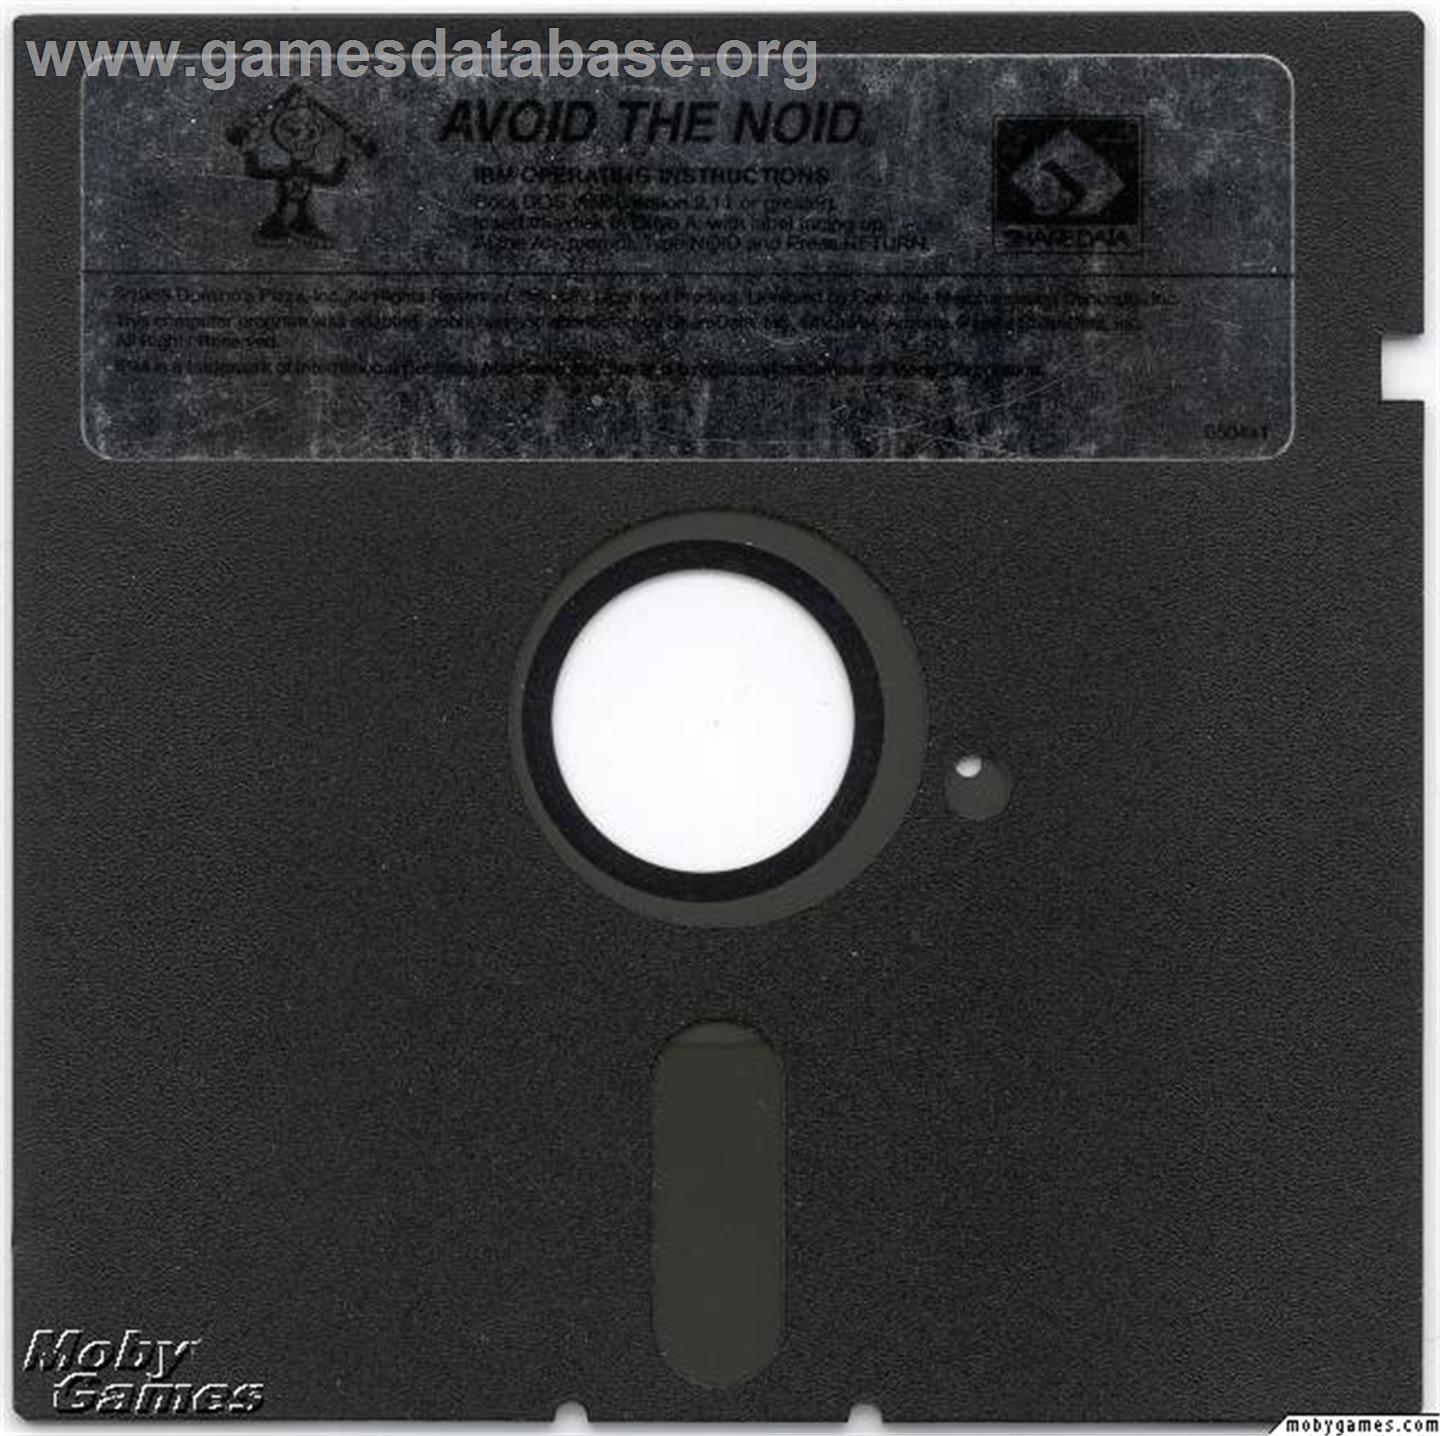 Avoid the Noid - Microsoft DOS - Artwork - Disc